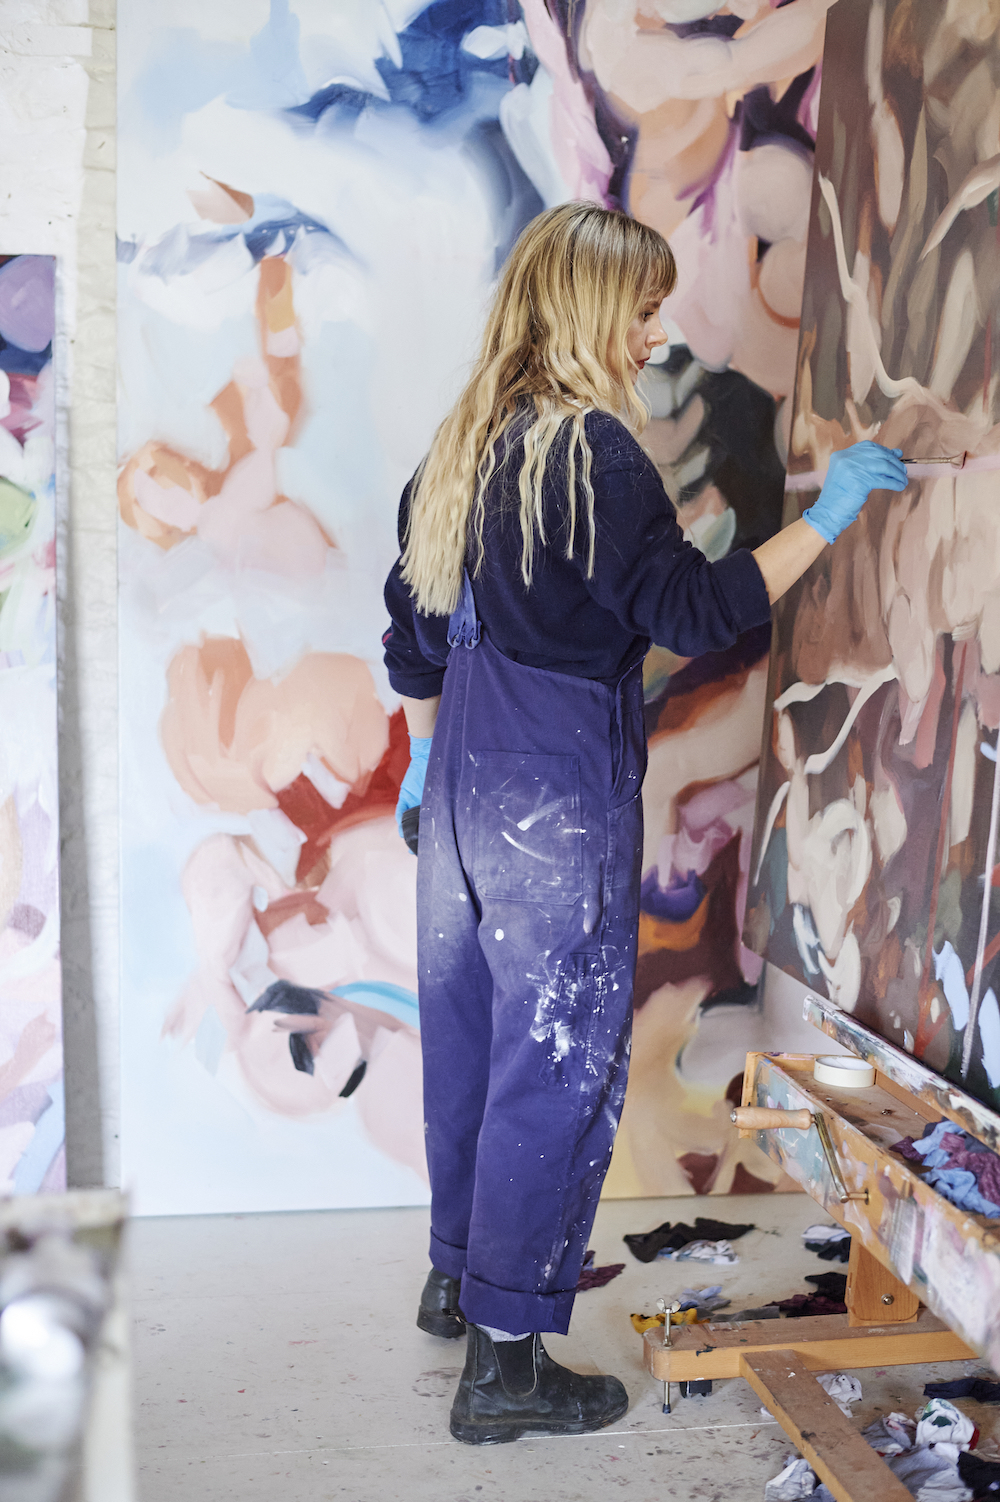 The Wick - Eleanor Johnson at work in her studio